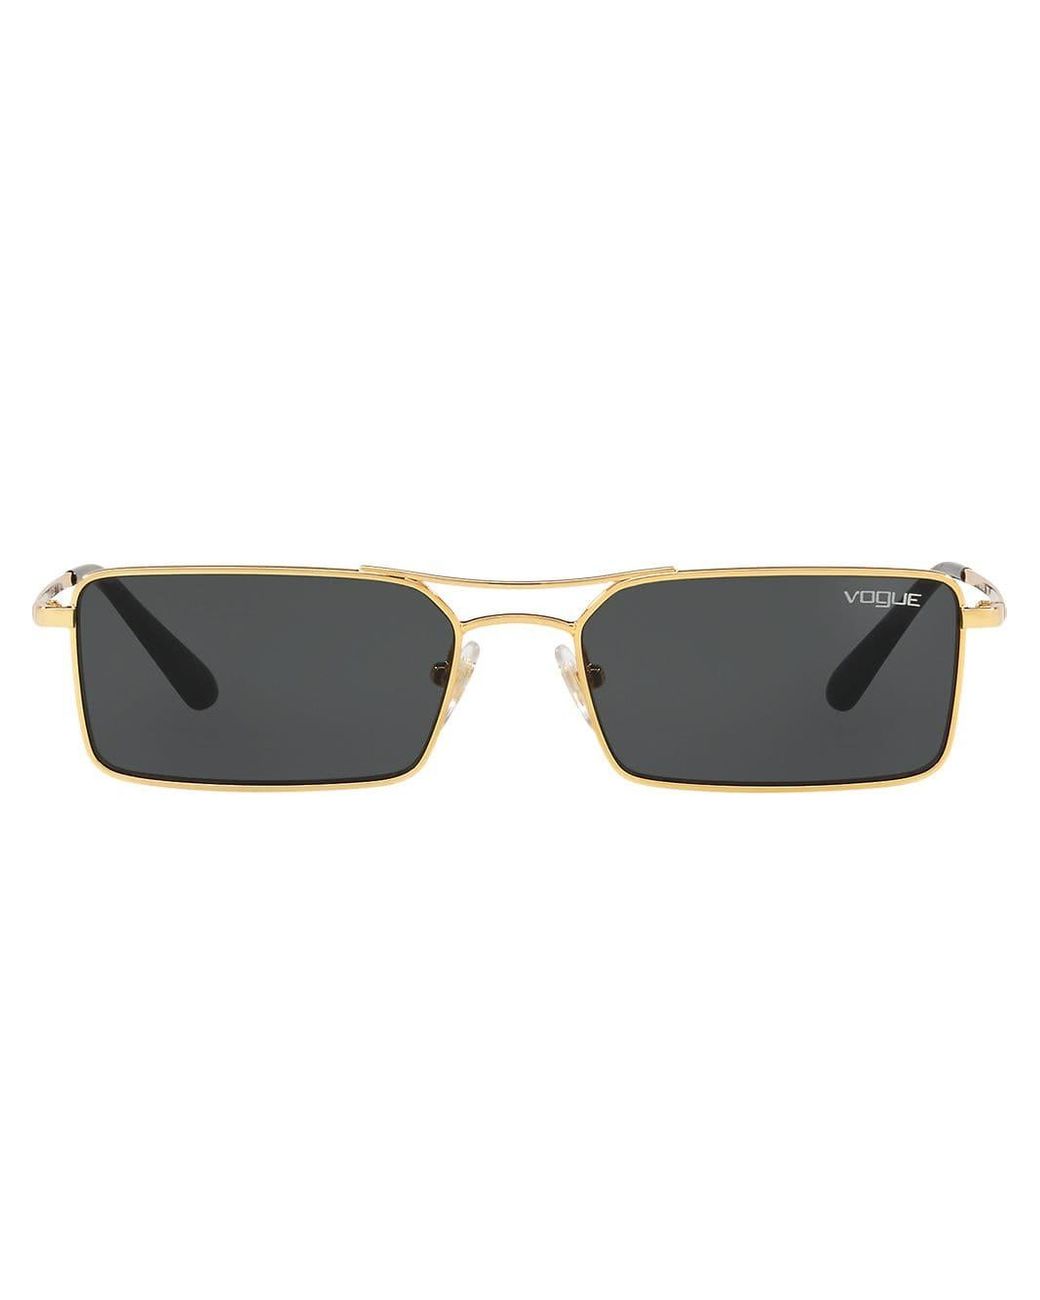 Vogue Eyewear Gigi Hadid Capsule Square Shaped Sunglasses in Metallic |  Lyst Canada